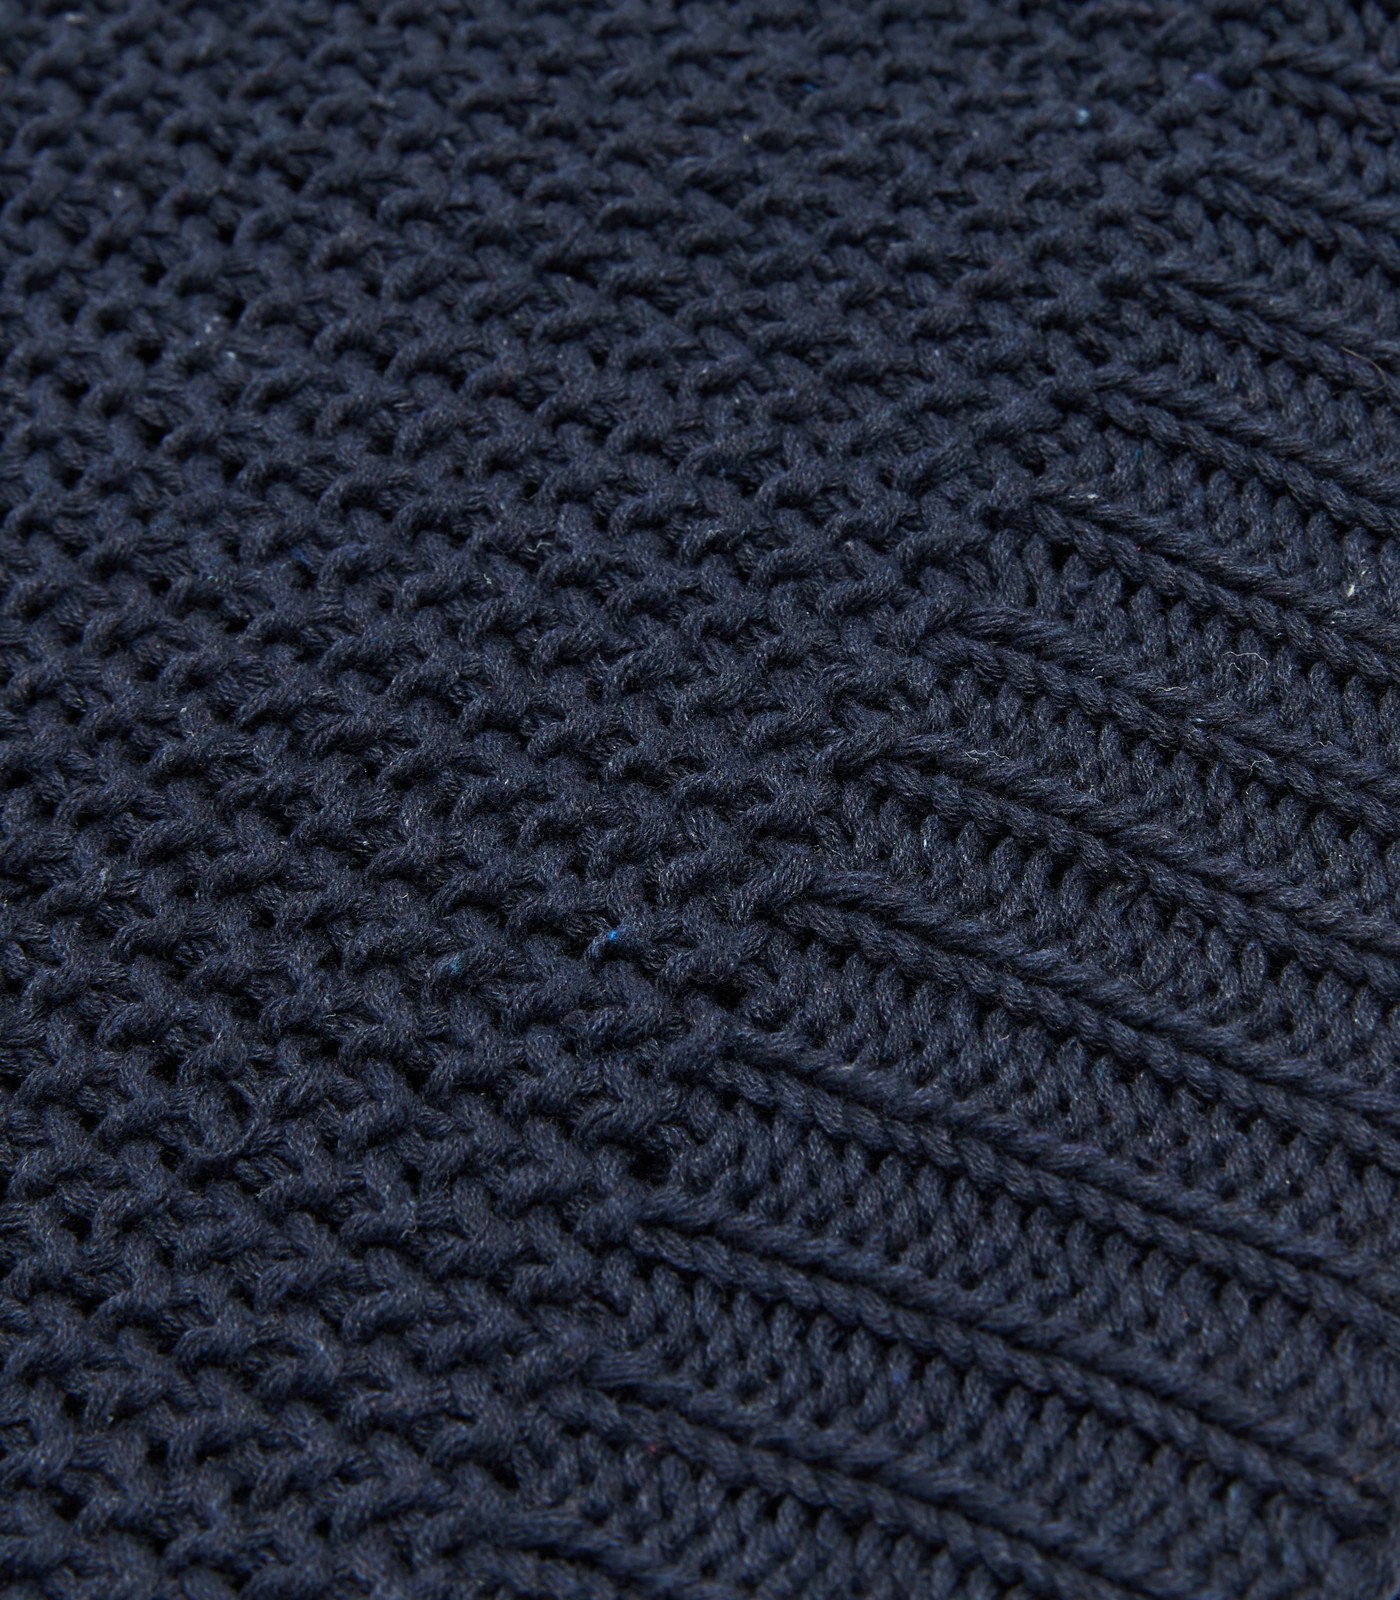 Jaspin Knitted Throw - Navy Blue | Target Australia